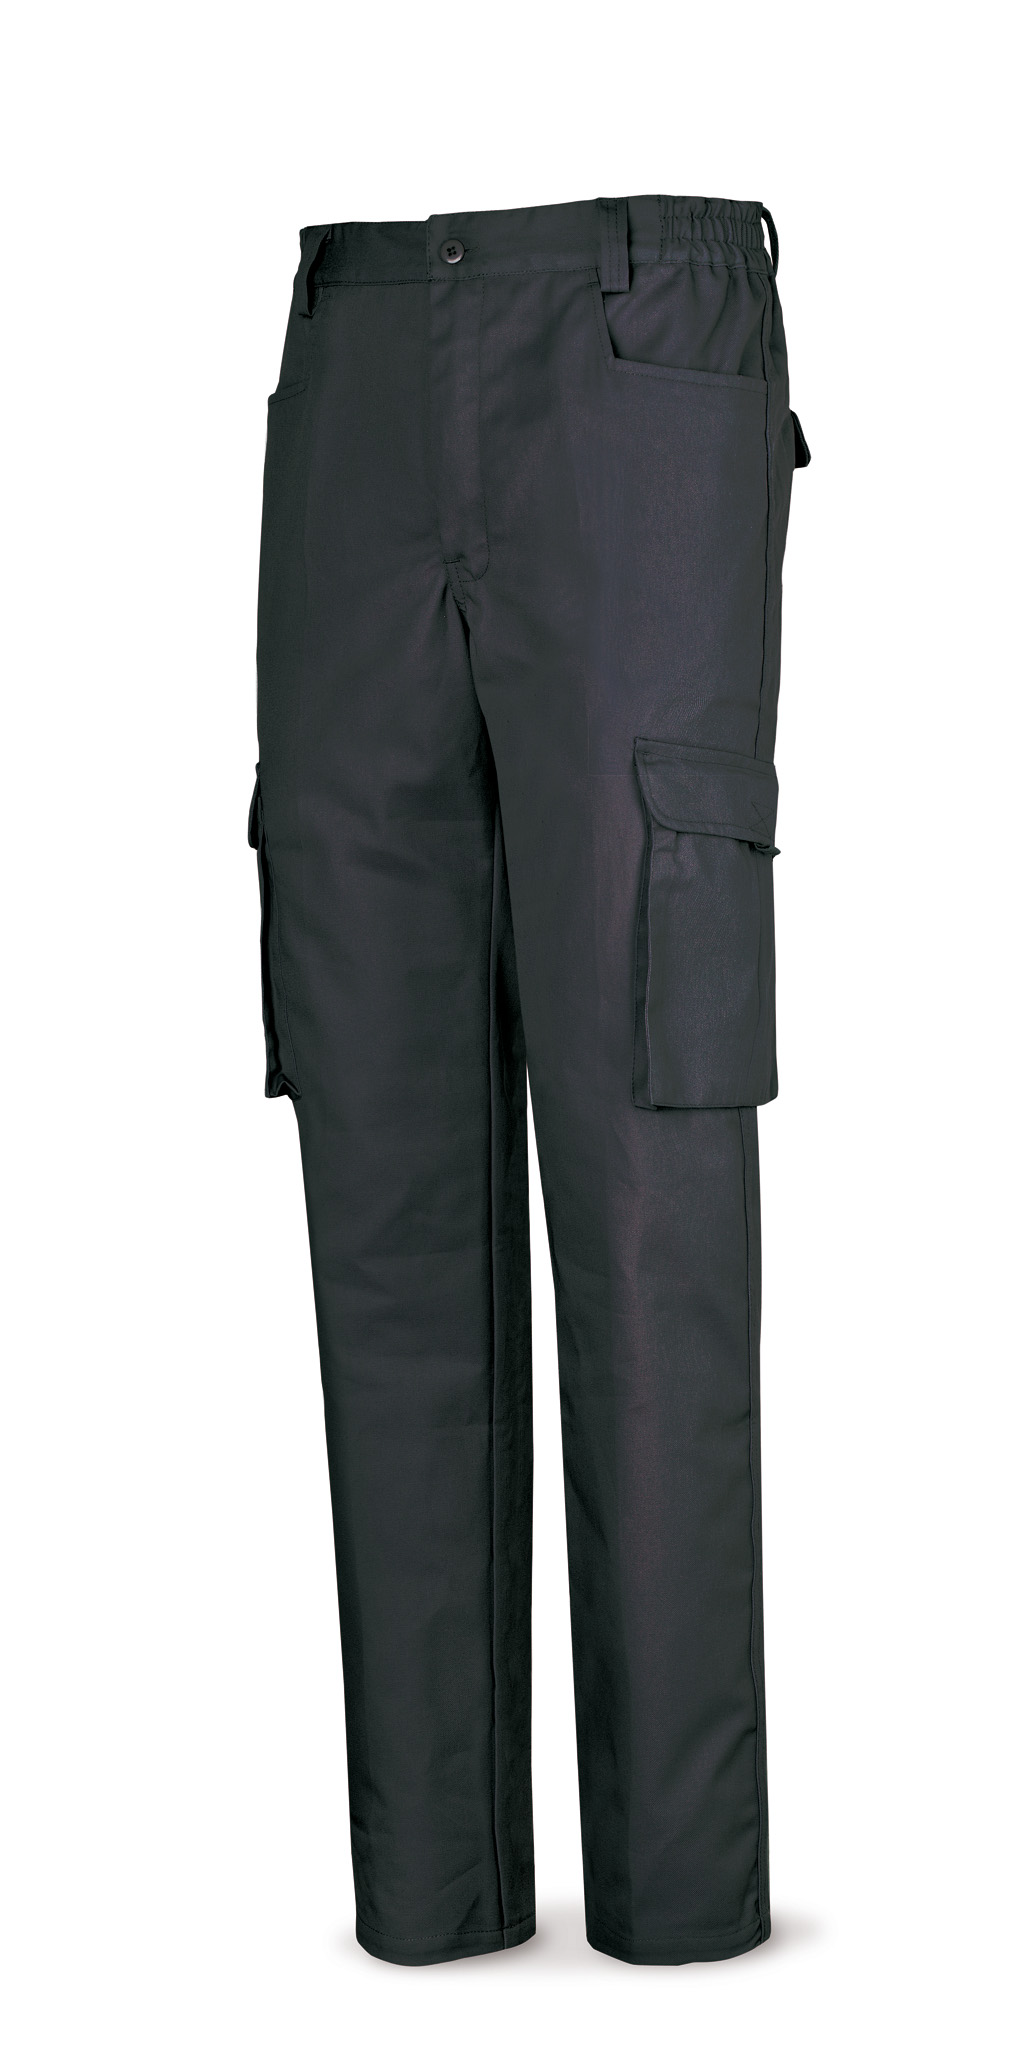 488-PN Top Vestuario Laboral Serie Top Pantalón negro tergal de 245 g. 